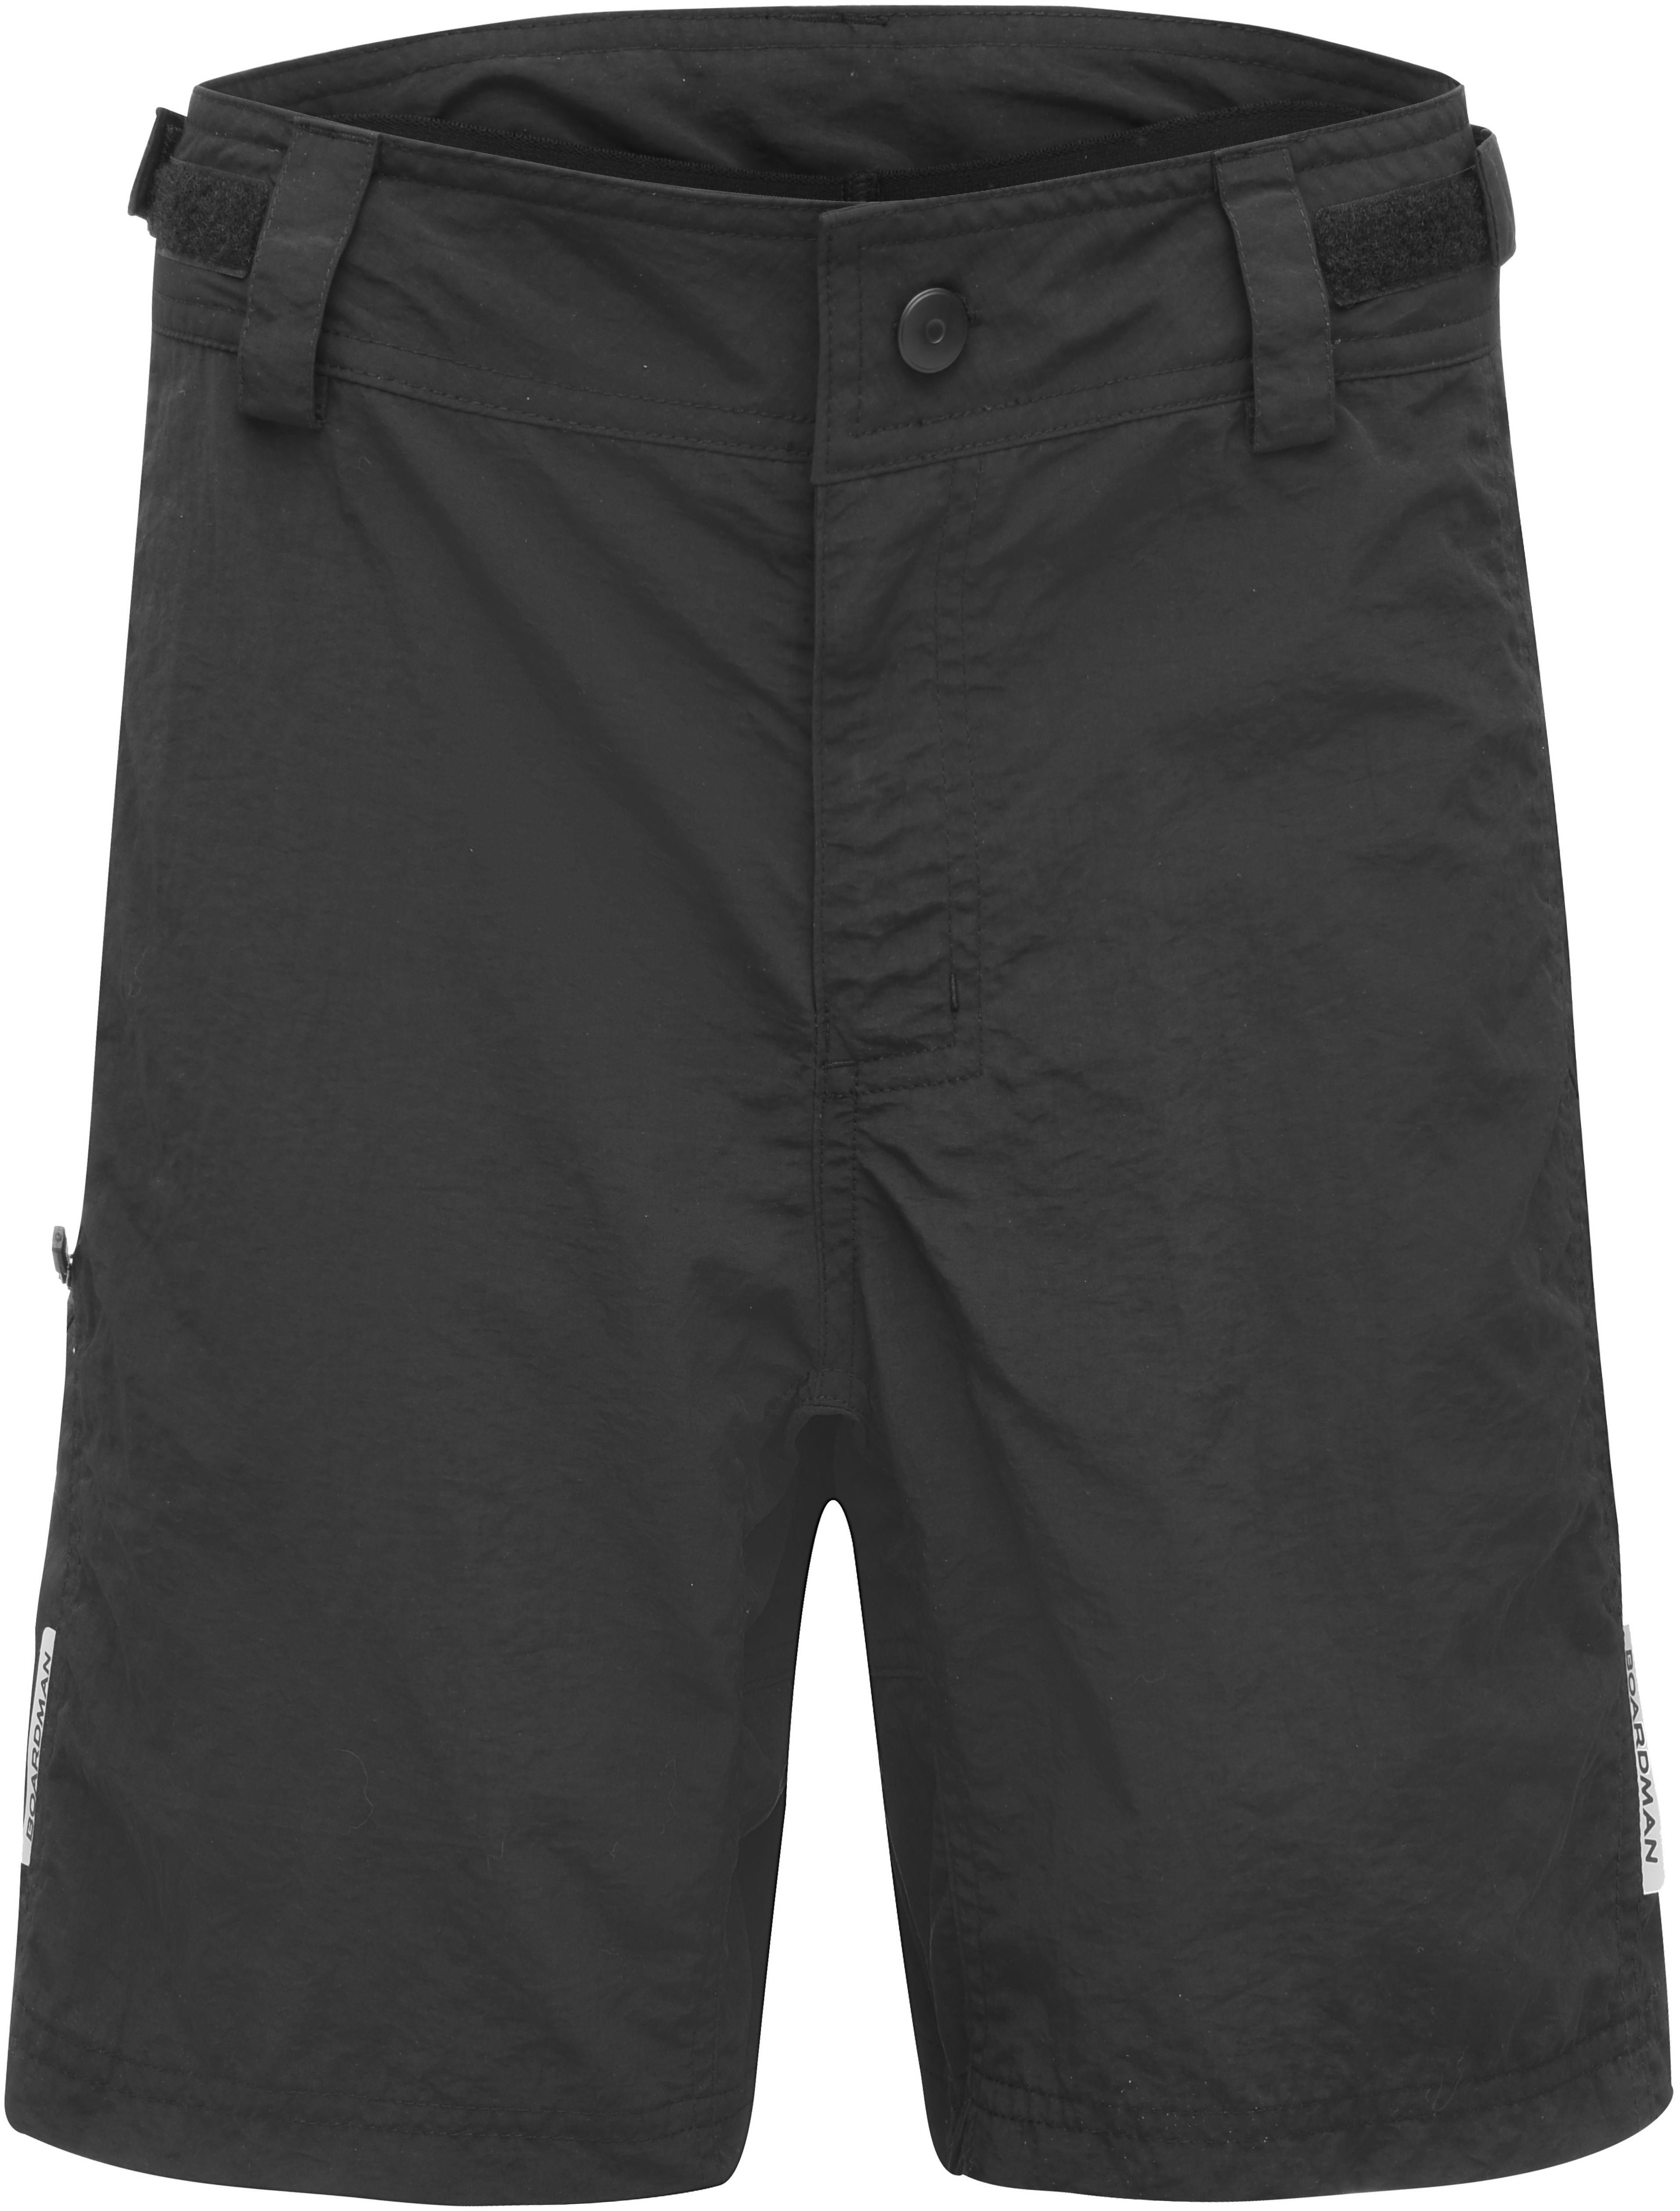 boardman cycle shorts